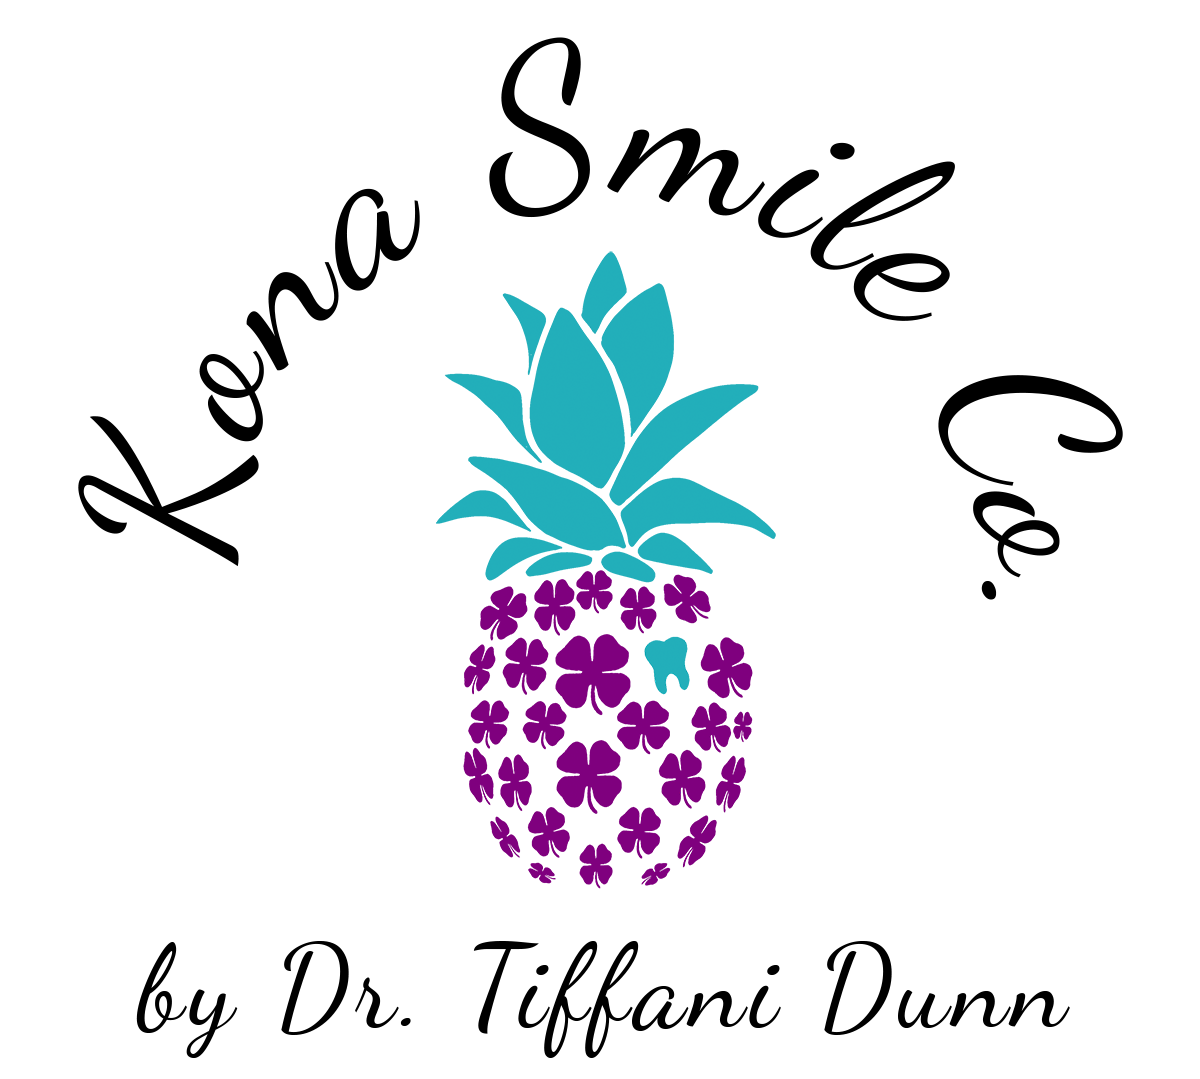 Kona Smile Company logo with a hand drawn pinapple with clovers & teeth, along with text saying "Kona Smile Co" "By Dr. Tiffani Dunn"